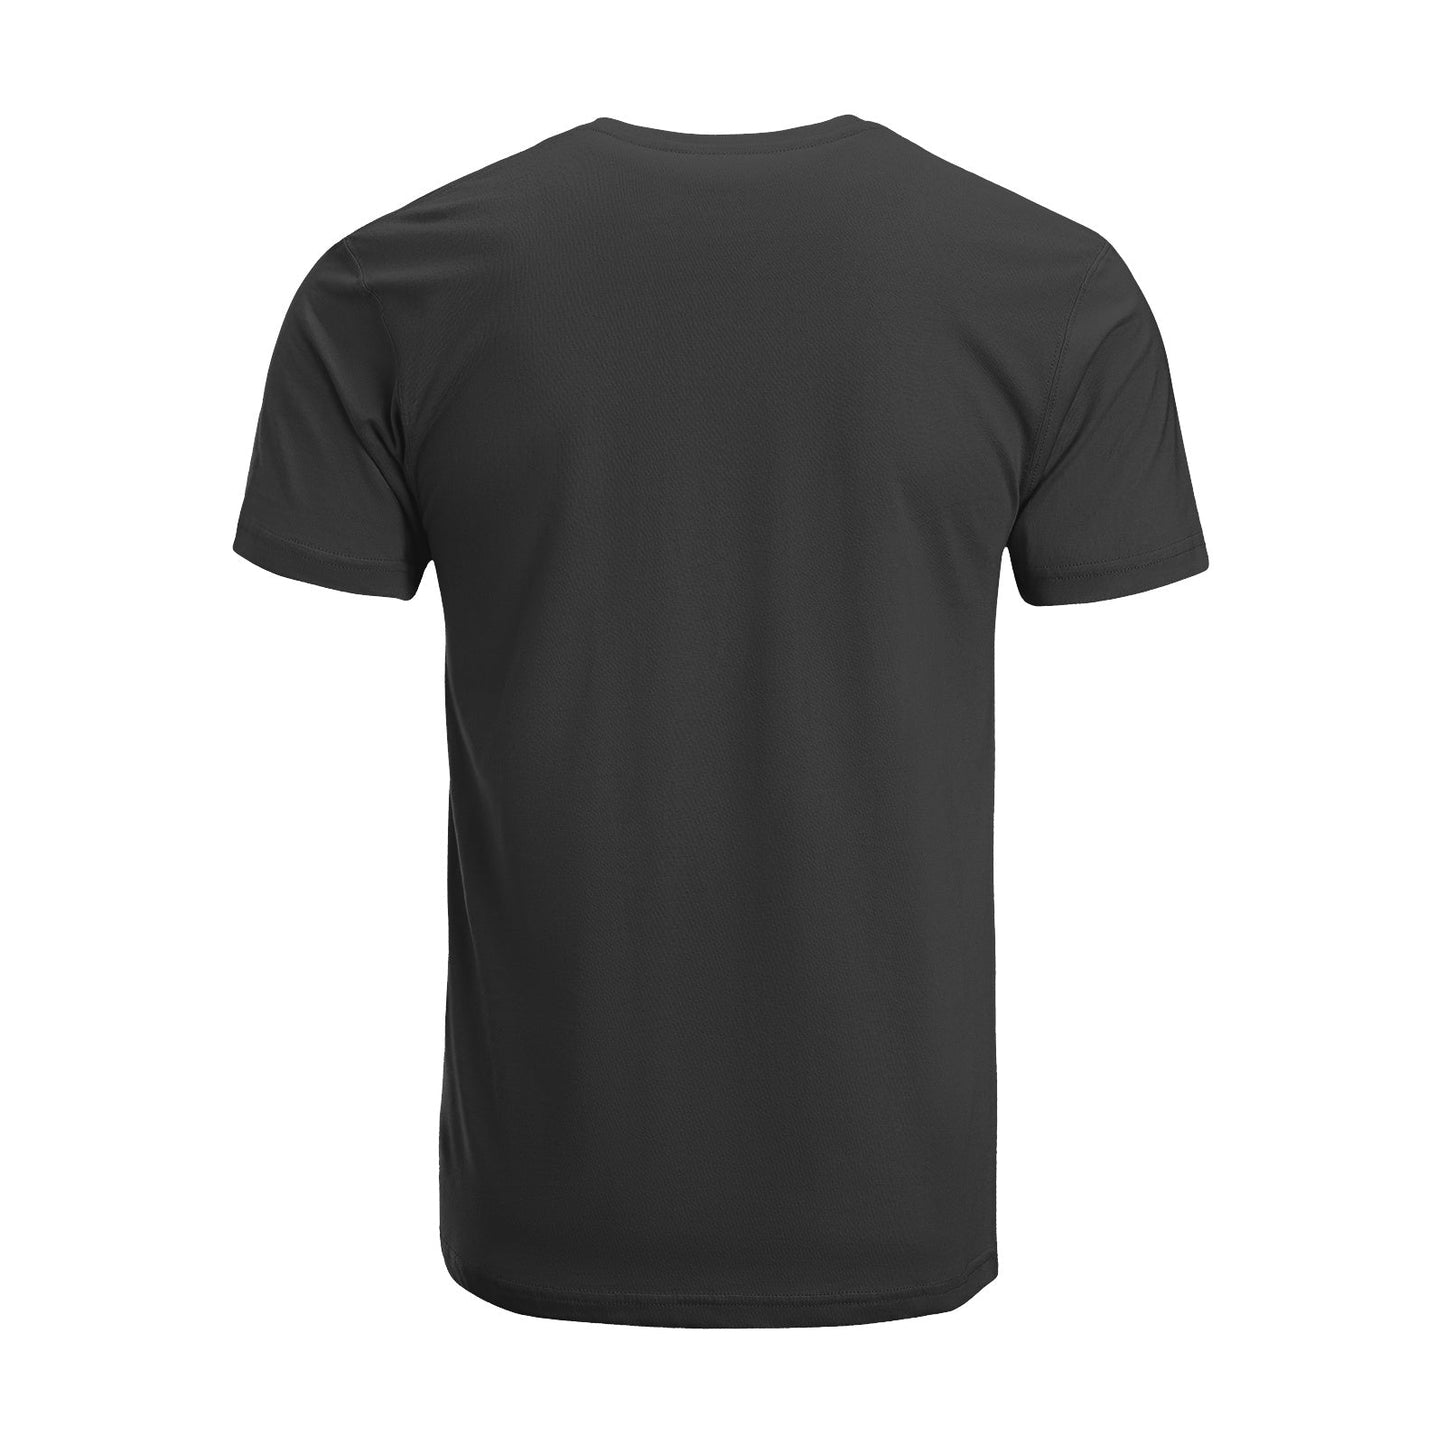 Unisex Short Sleeve Crew Neck Cotton Jersey T-Shirt MOM 43